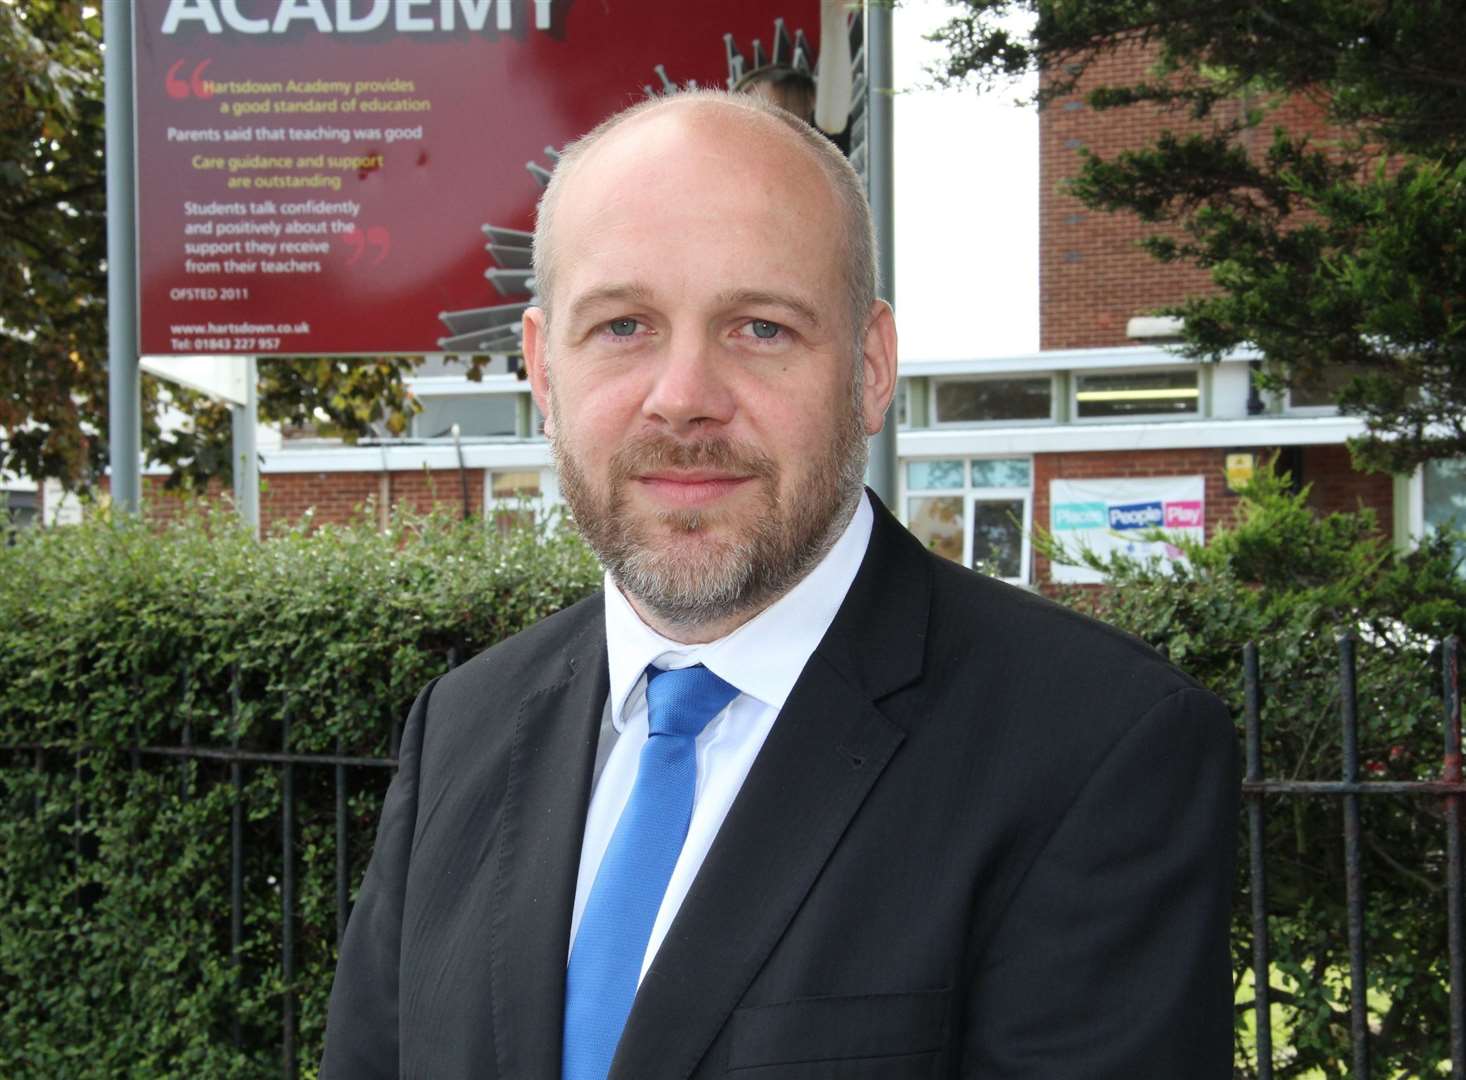 Matthew Tate is head teacher at Hartsdown Academy in Margate. Picture: Peter Barnett